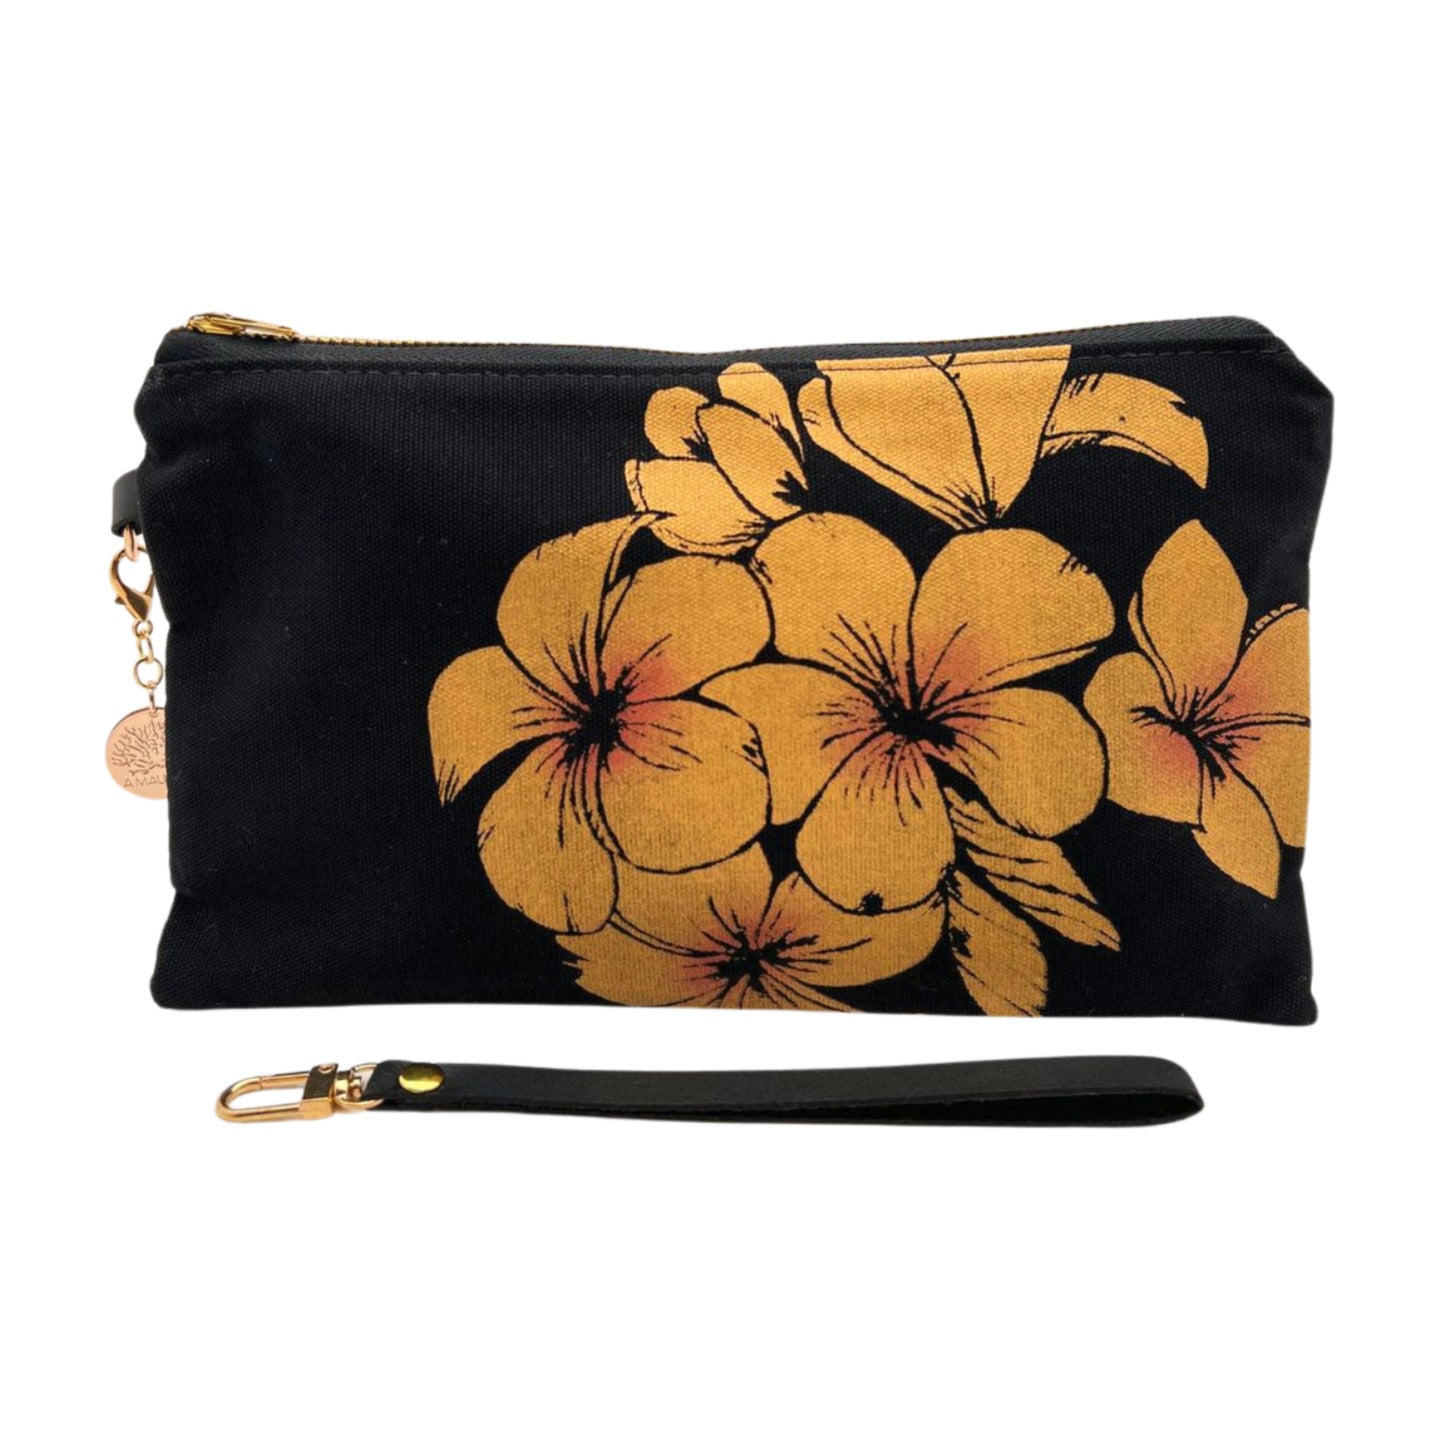 Pop-Up Mākeke - A Maui Day Original Handbags - Handprinted Small Handbag - Plumeria on Black Canvas - Front View - Strap Off